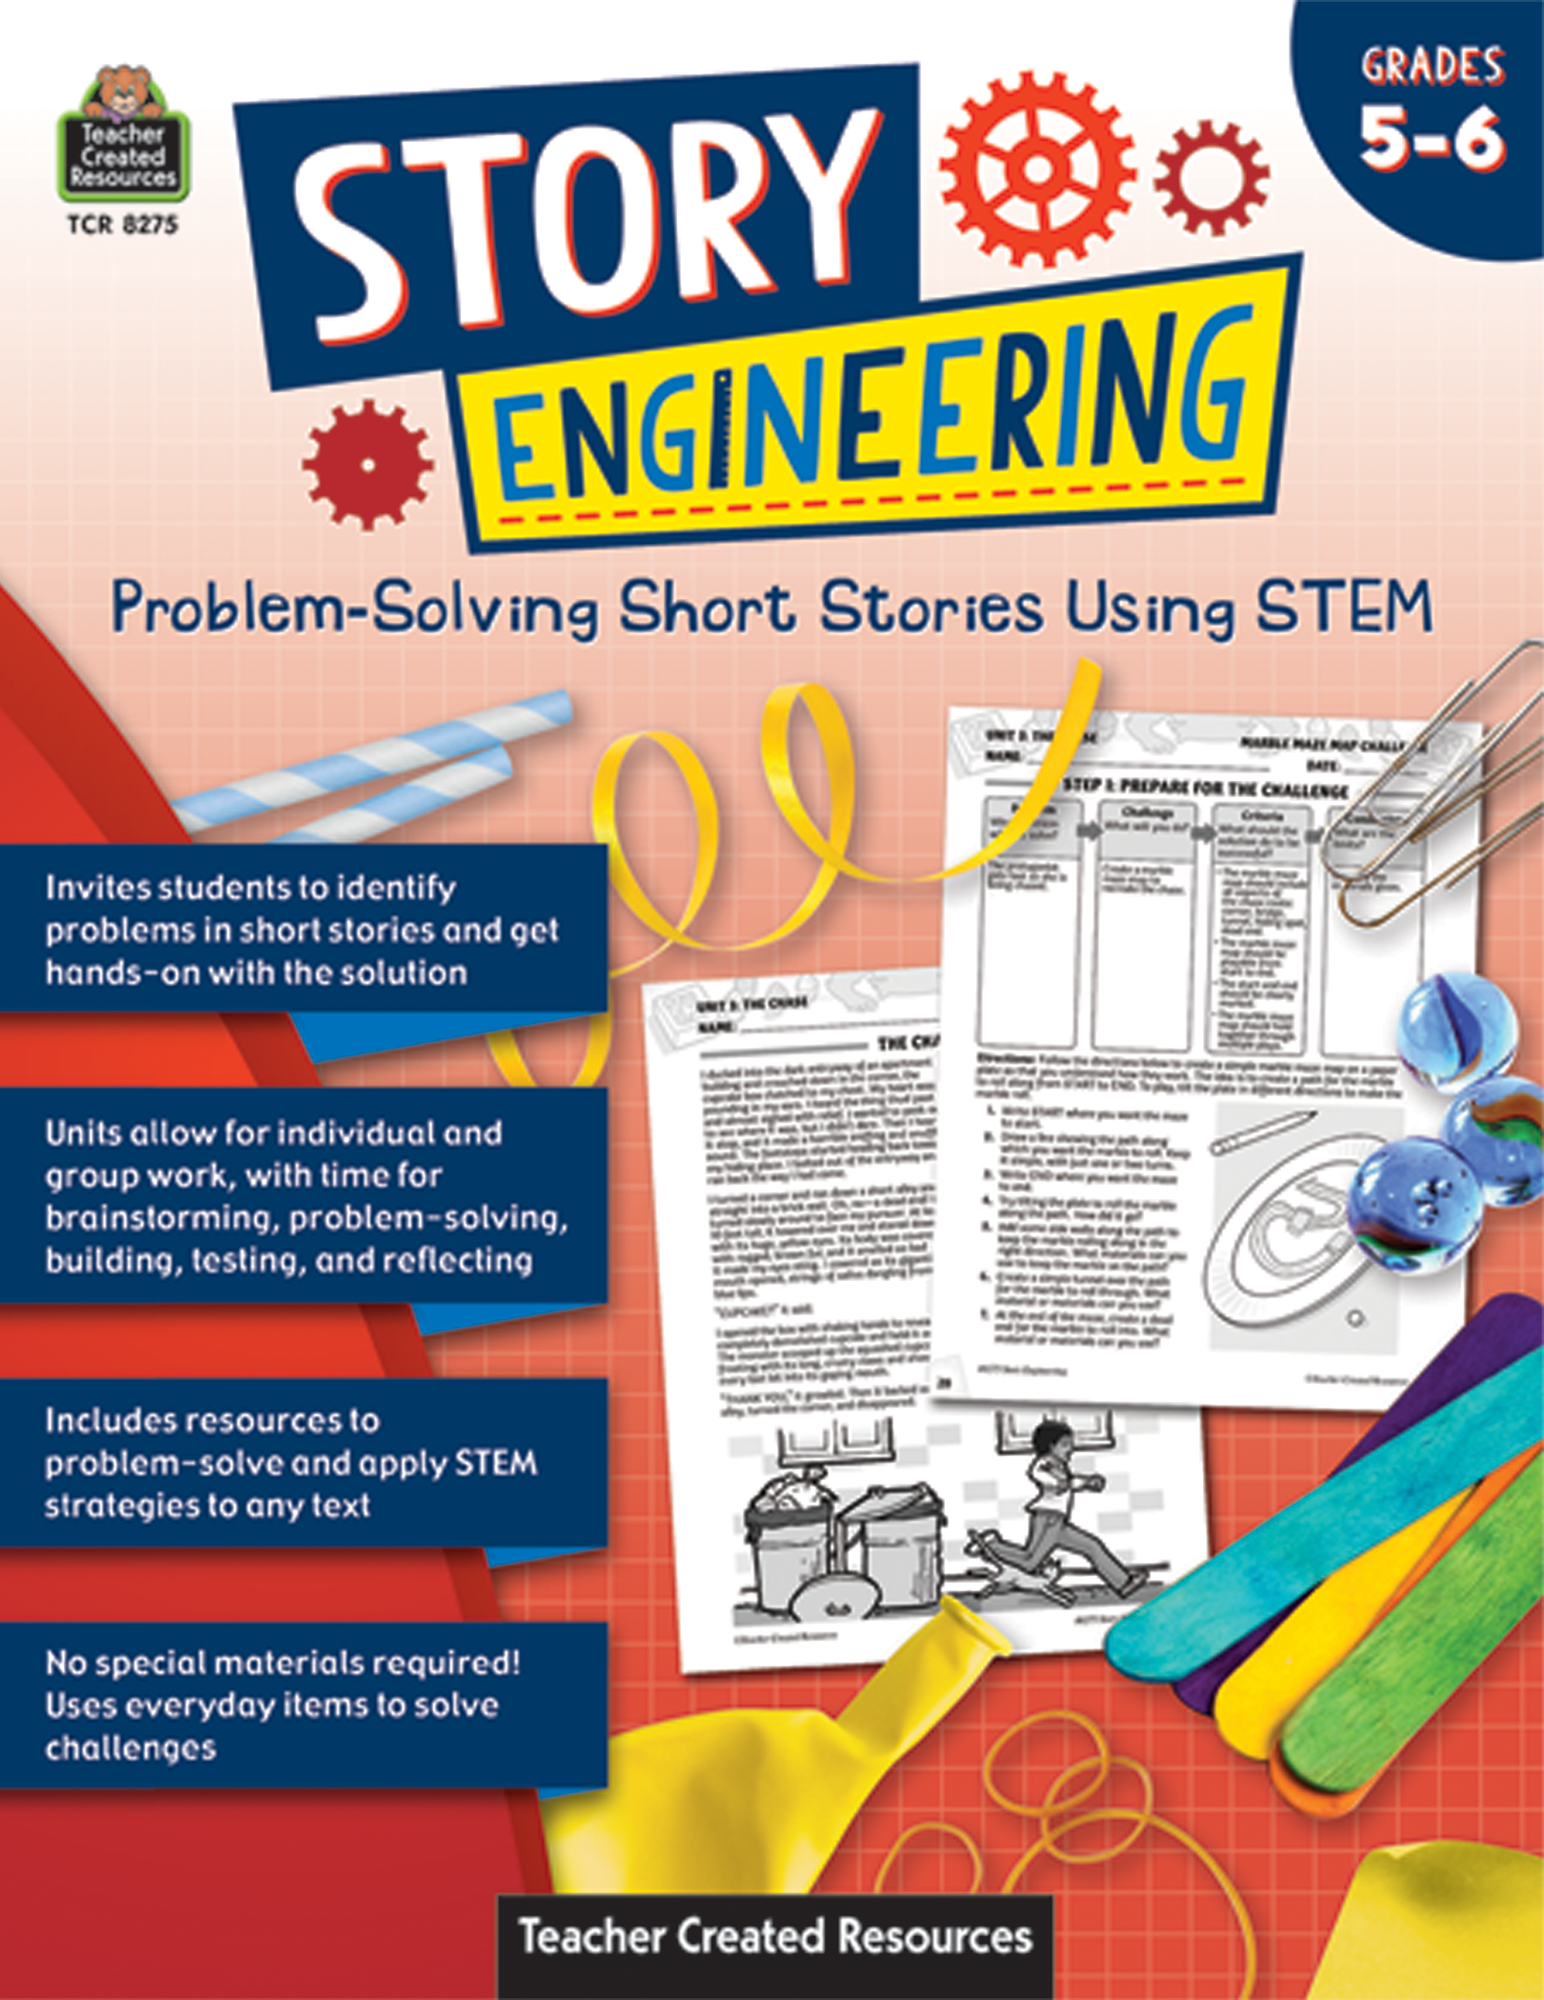 Problem-Solving Short Stories Using STEM